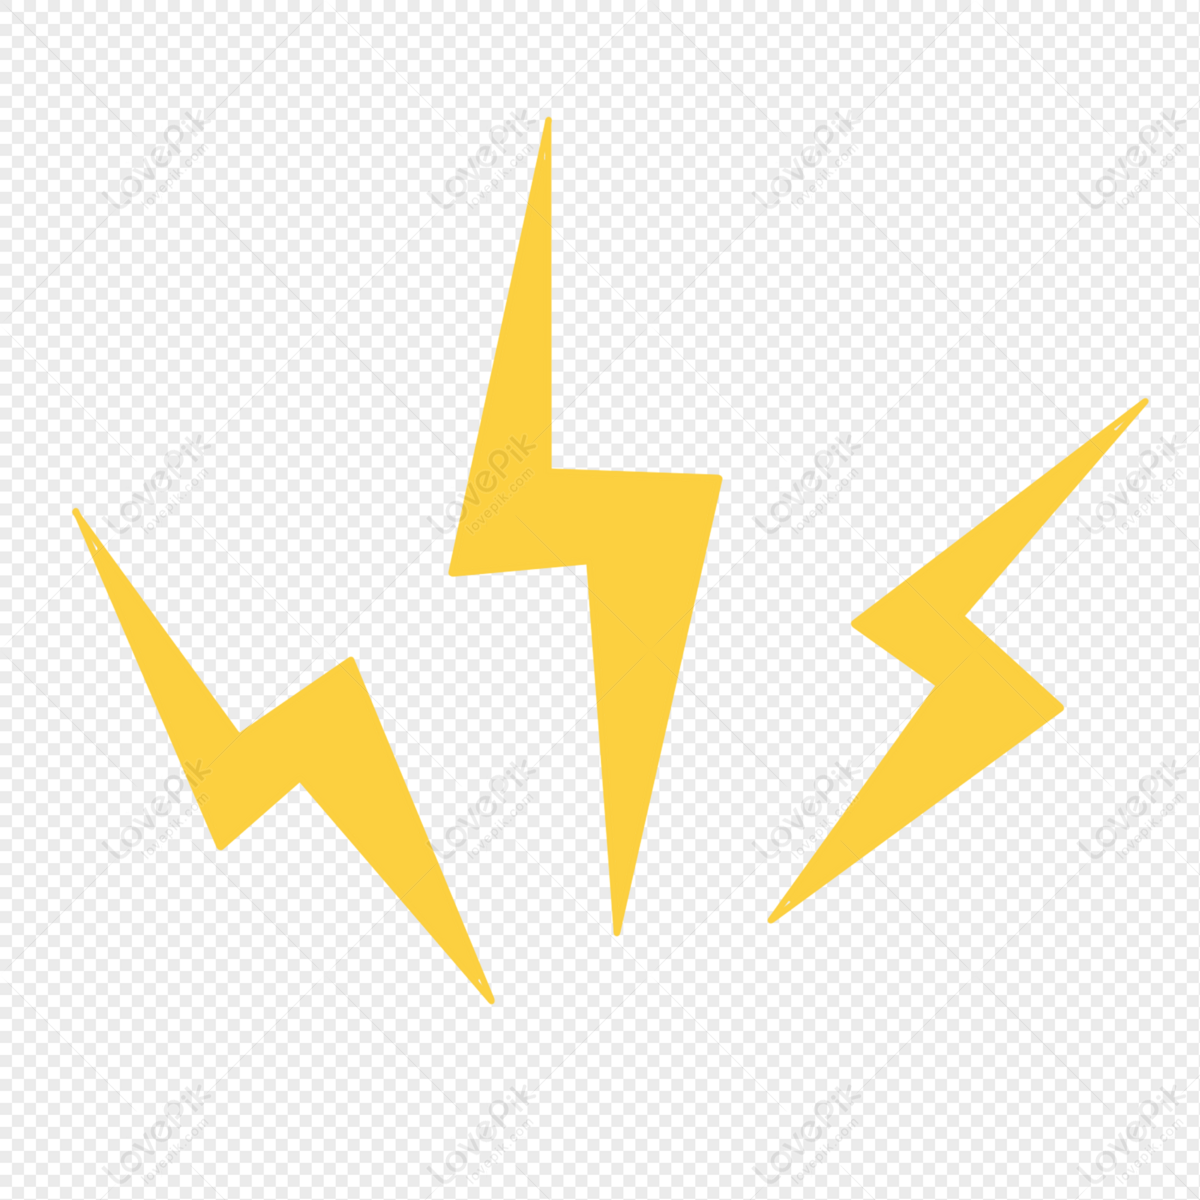 Lightning PNG Transparent Background And Clipart Image For Free Download -  Lovepik | 401478930